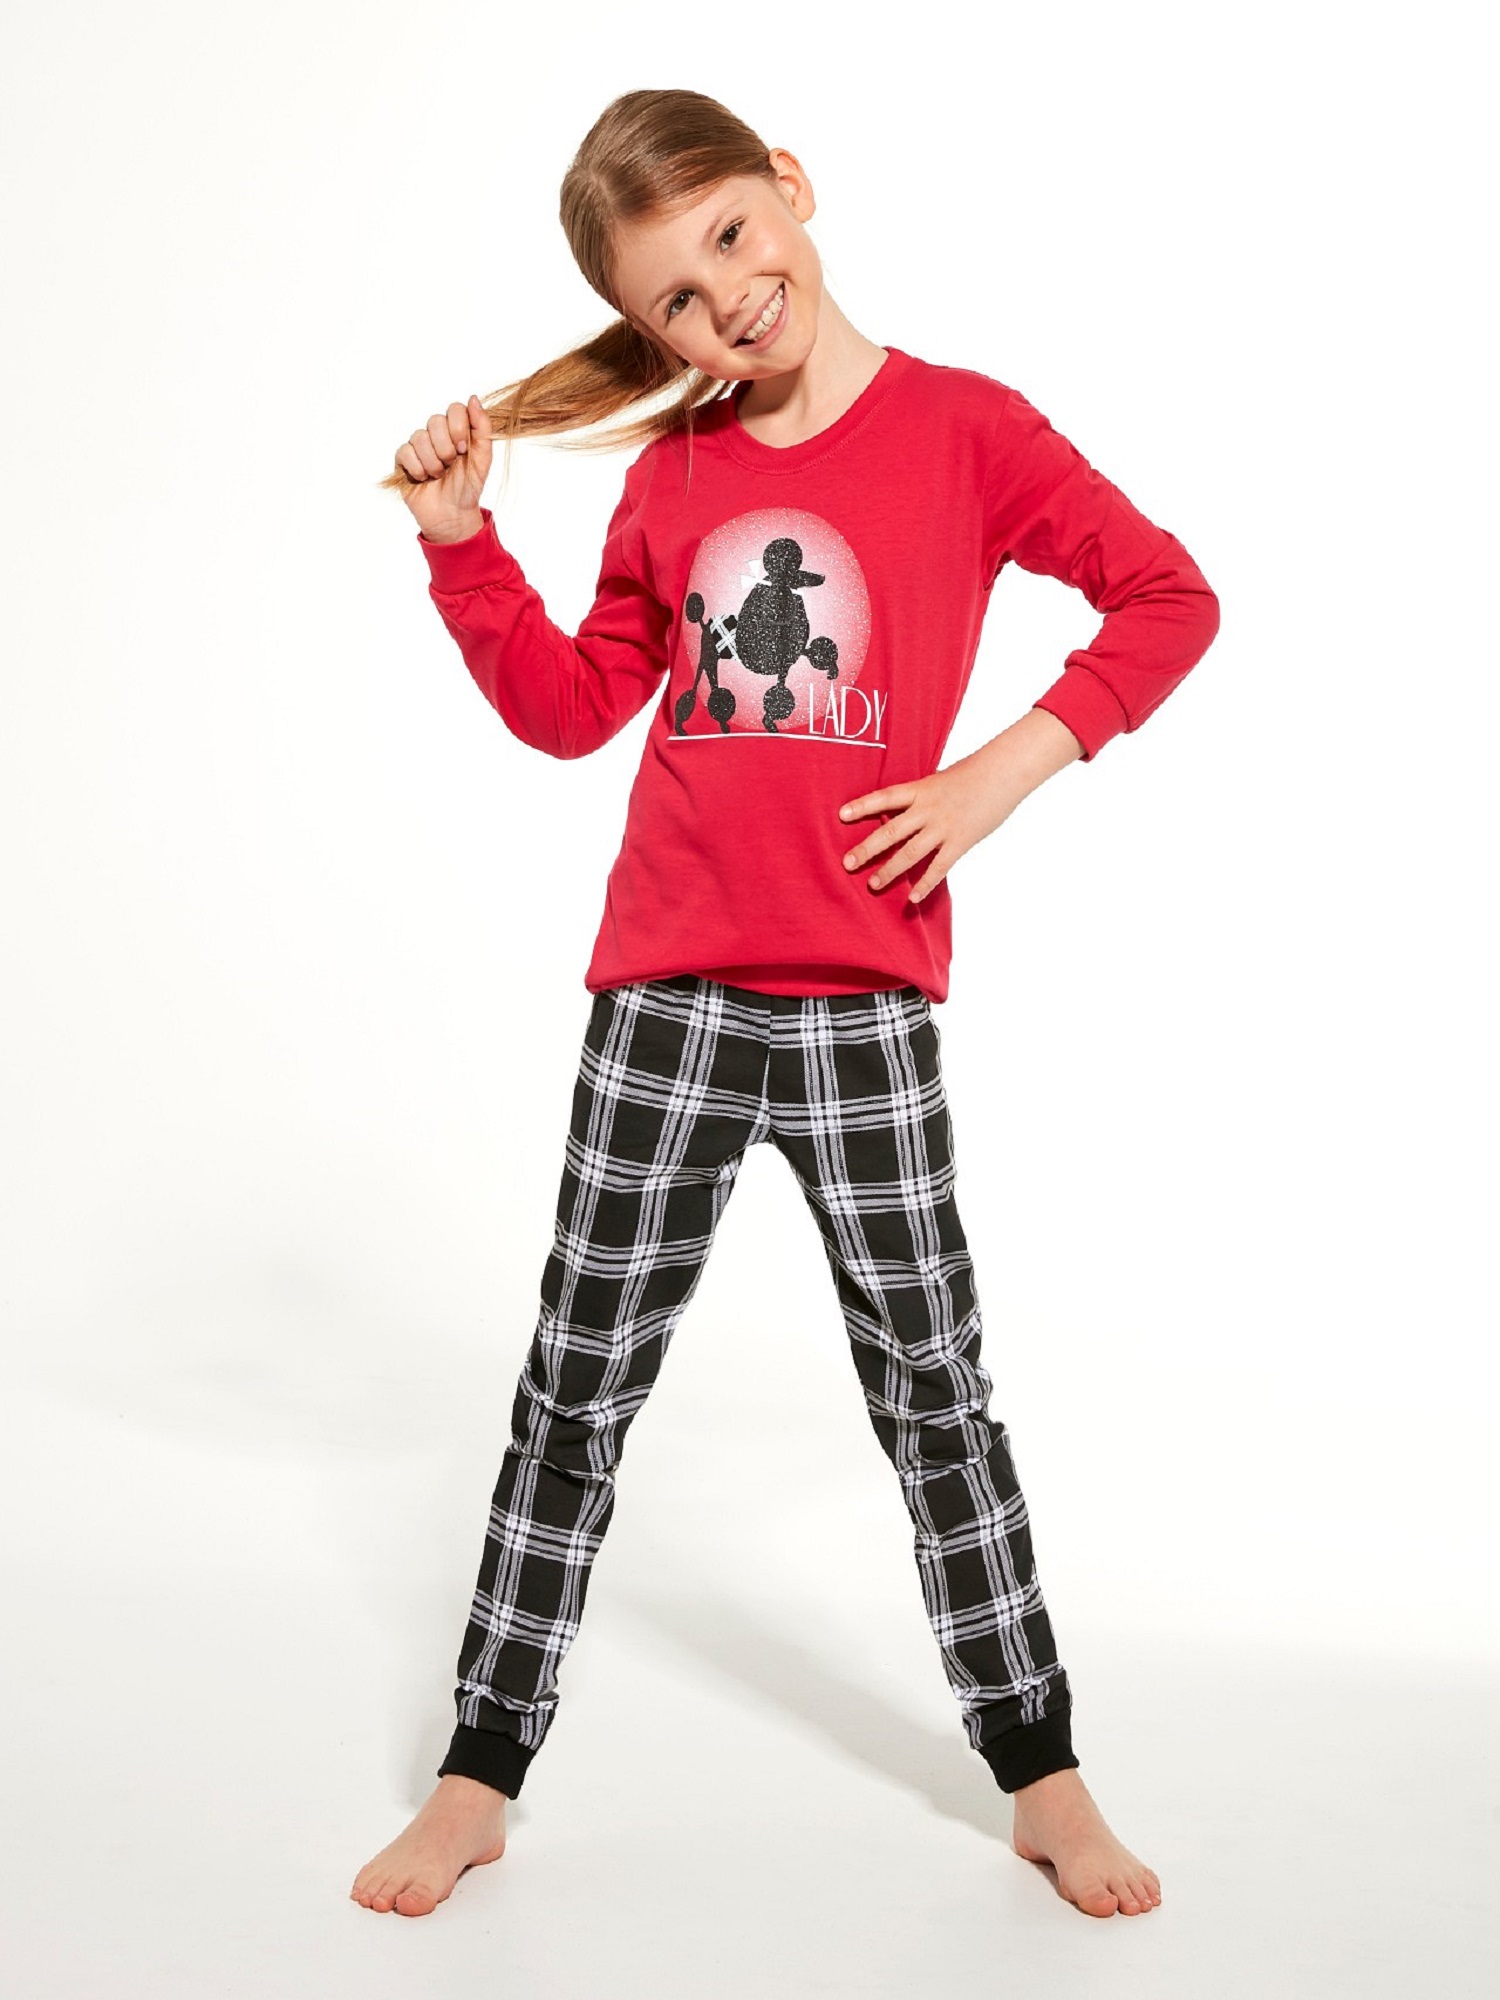 Pyjamas Cornette Young Girl 378/157 Lady 134-164 pink